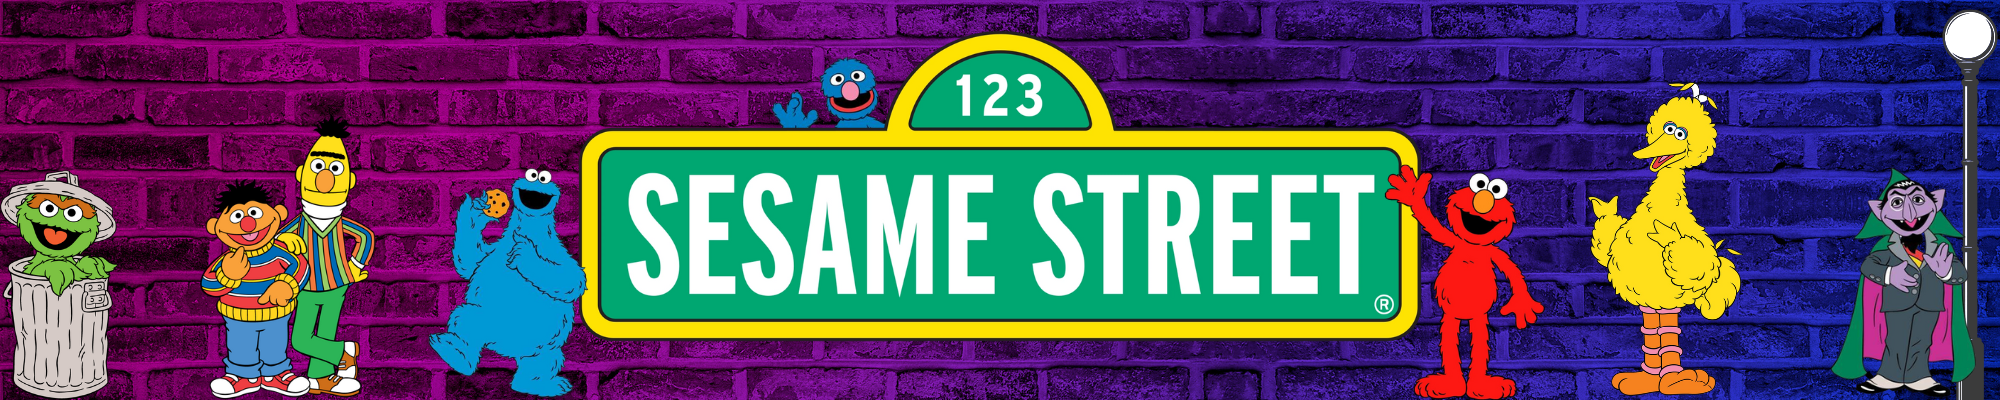 Sesame Street Toys, Big Bird, Elmo, Cookie monster